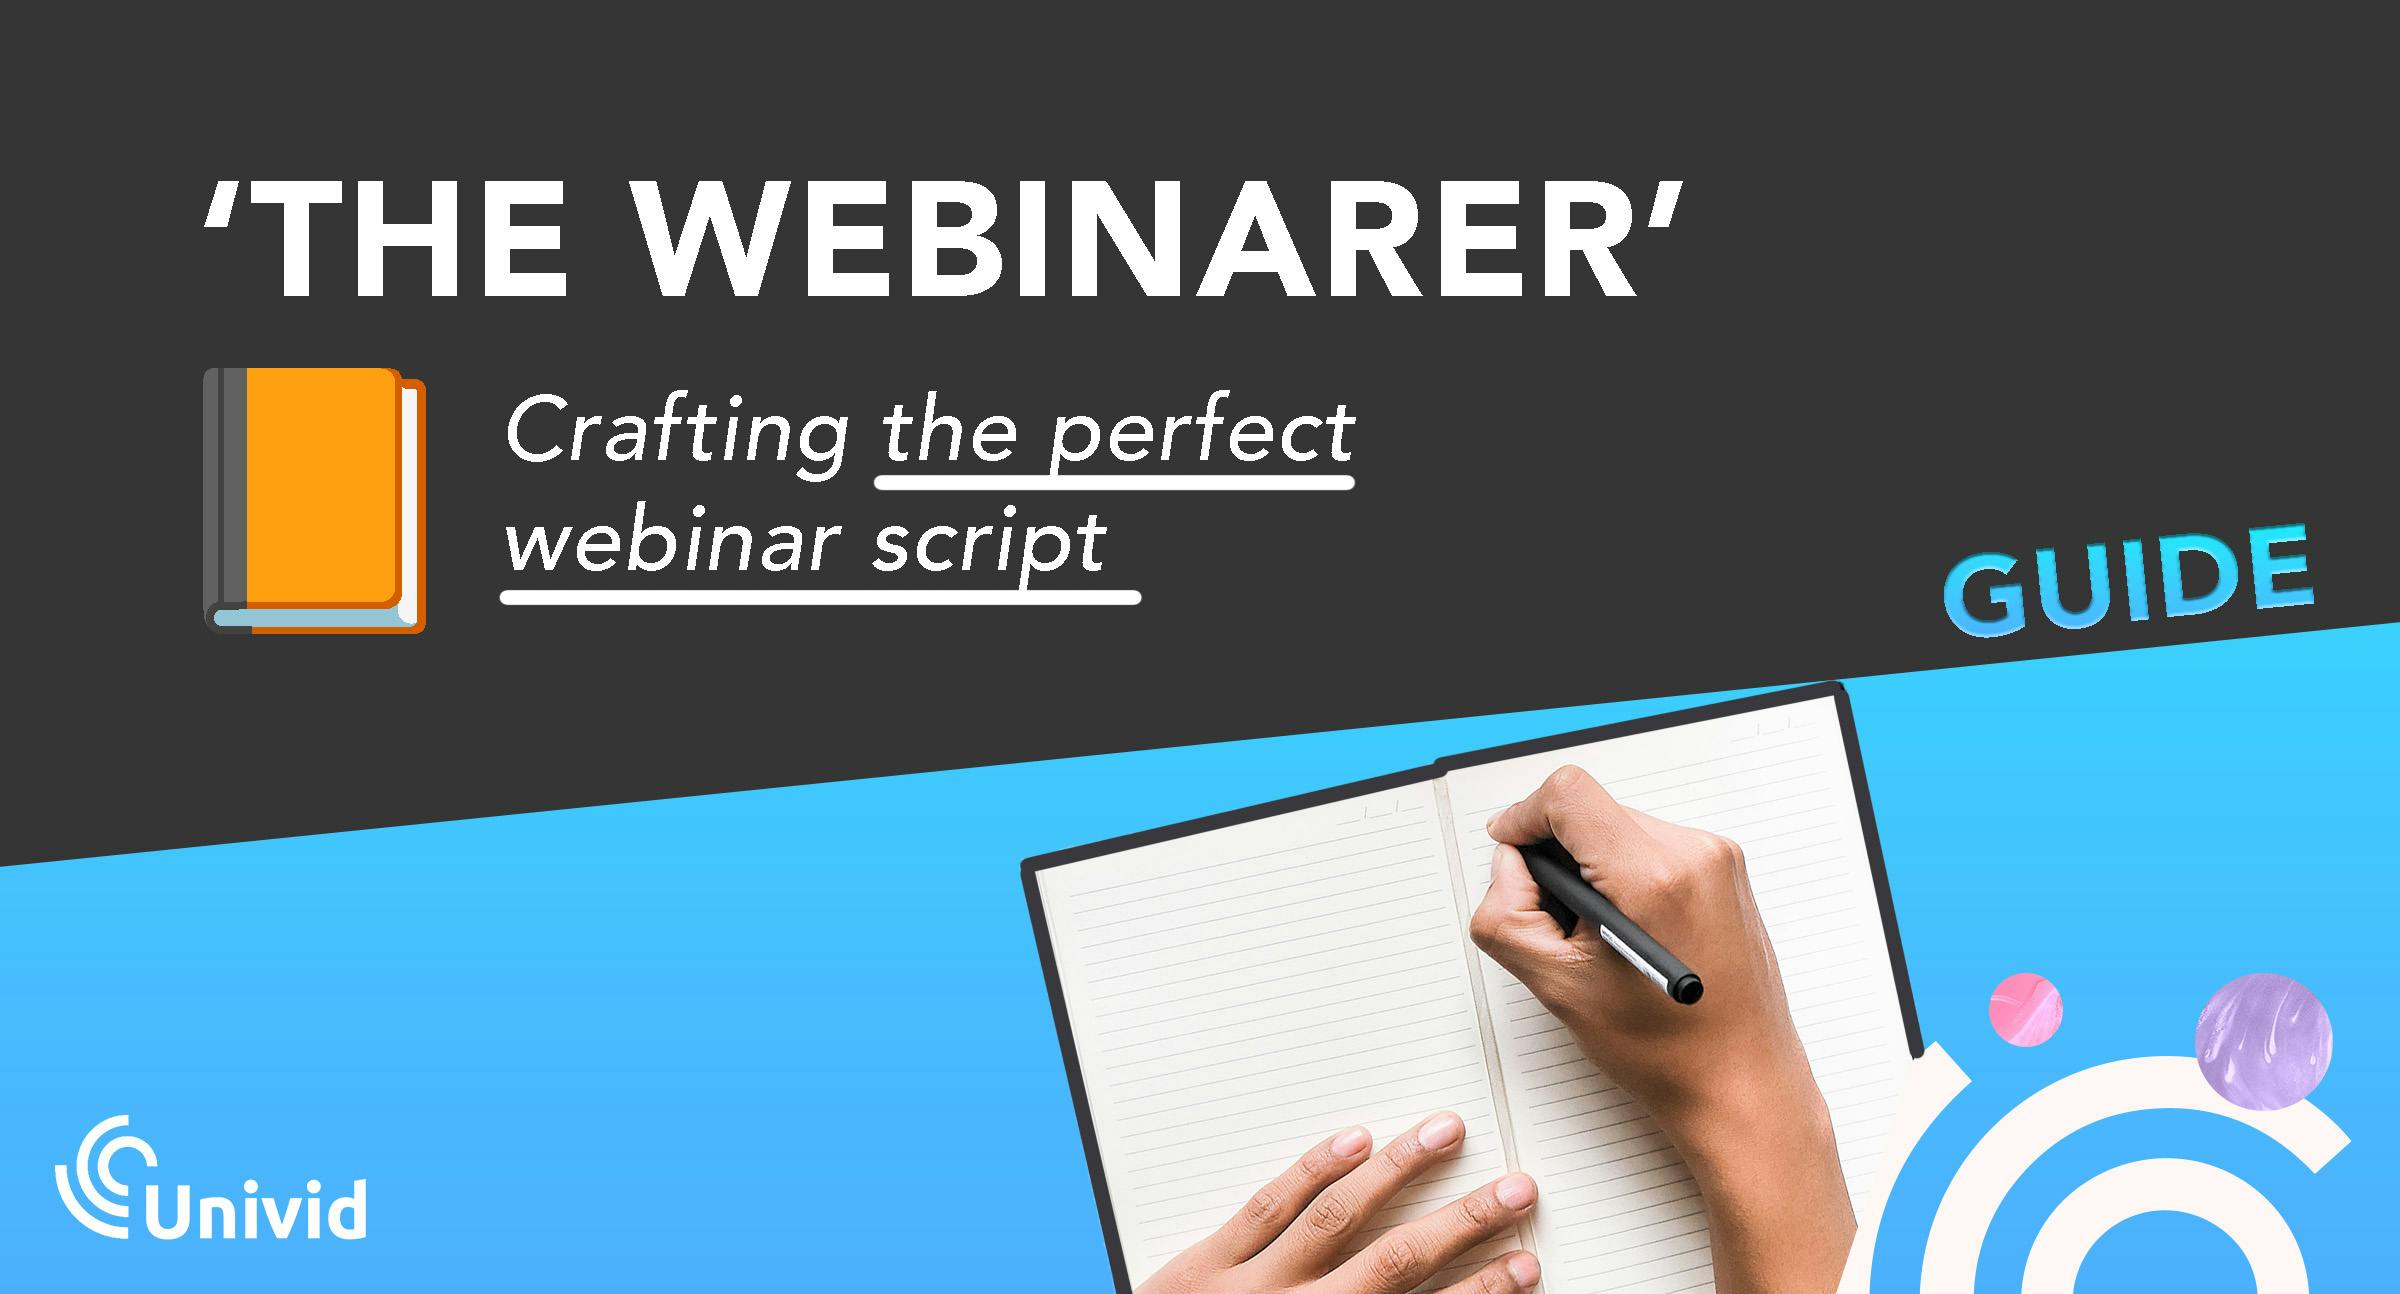 The Webinarer - Crafting the perfect webinar script as a webinar host